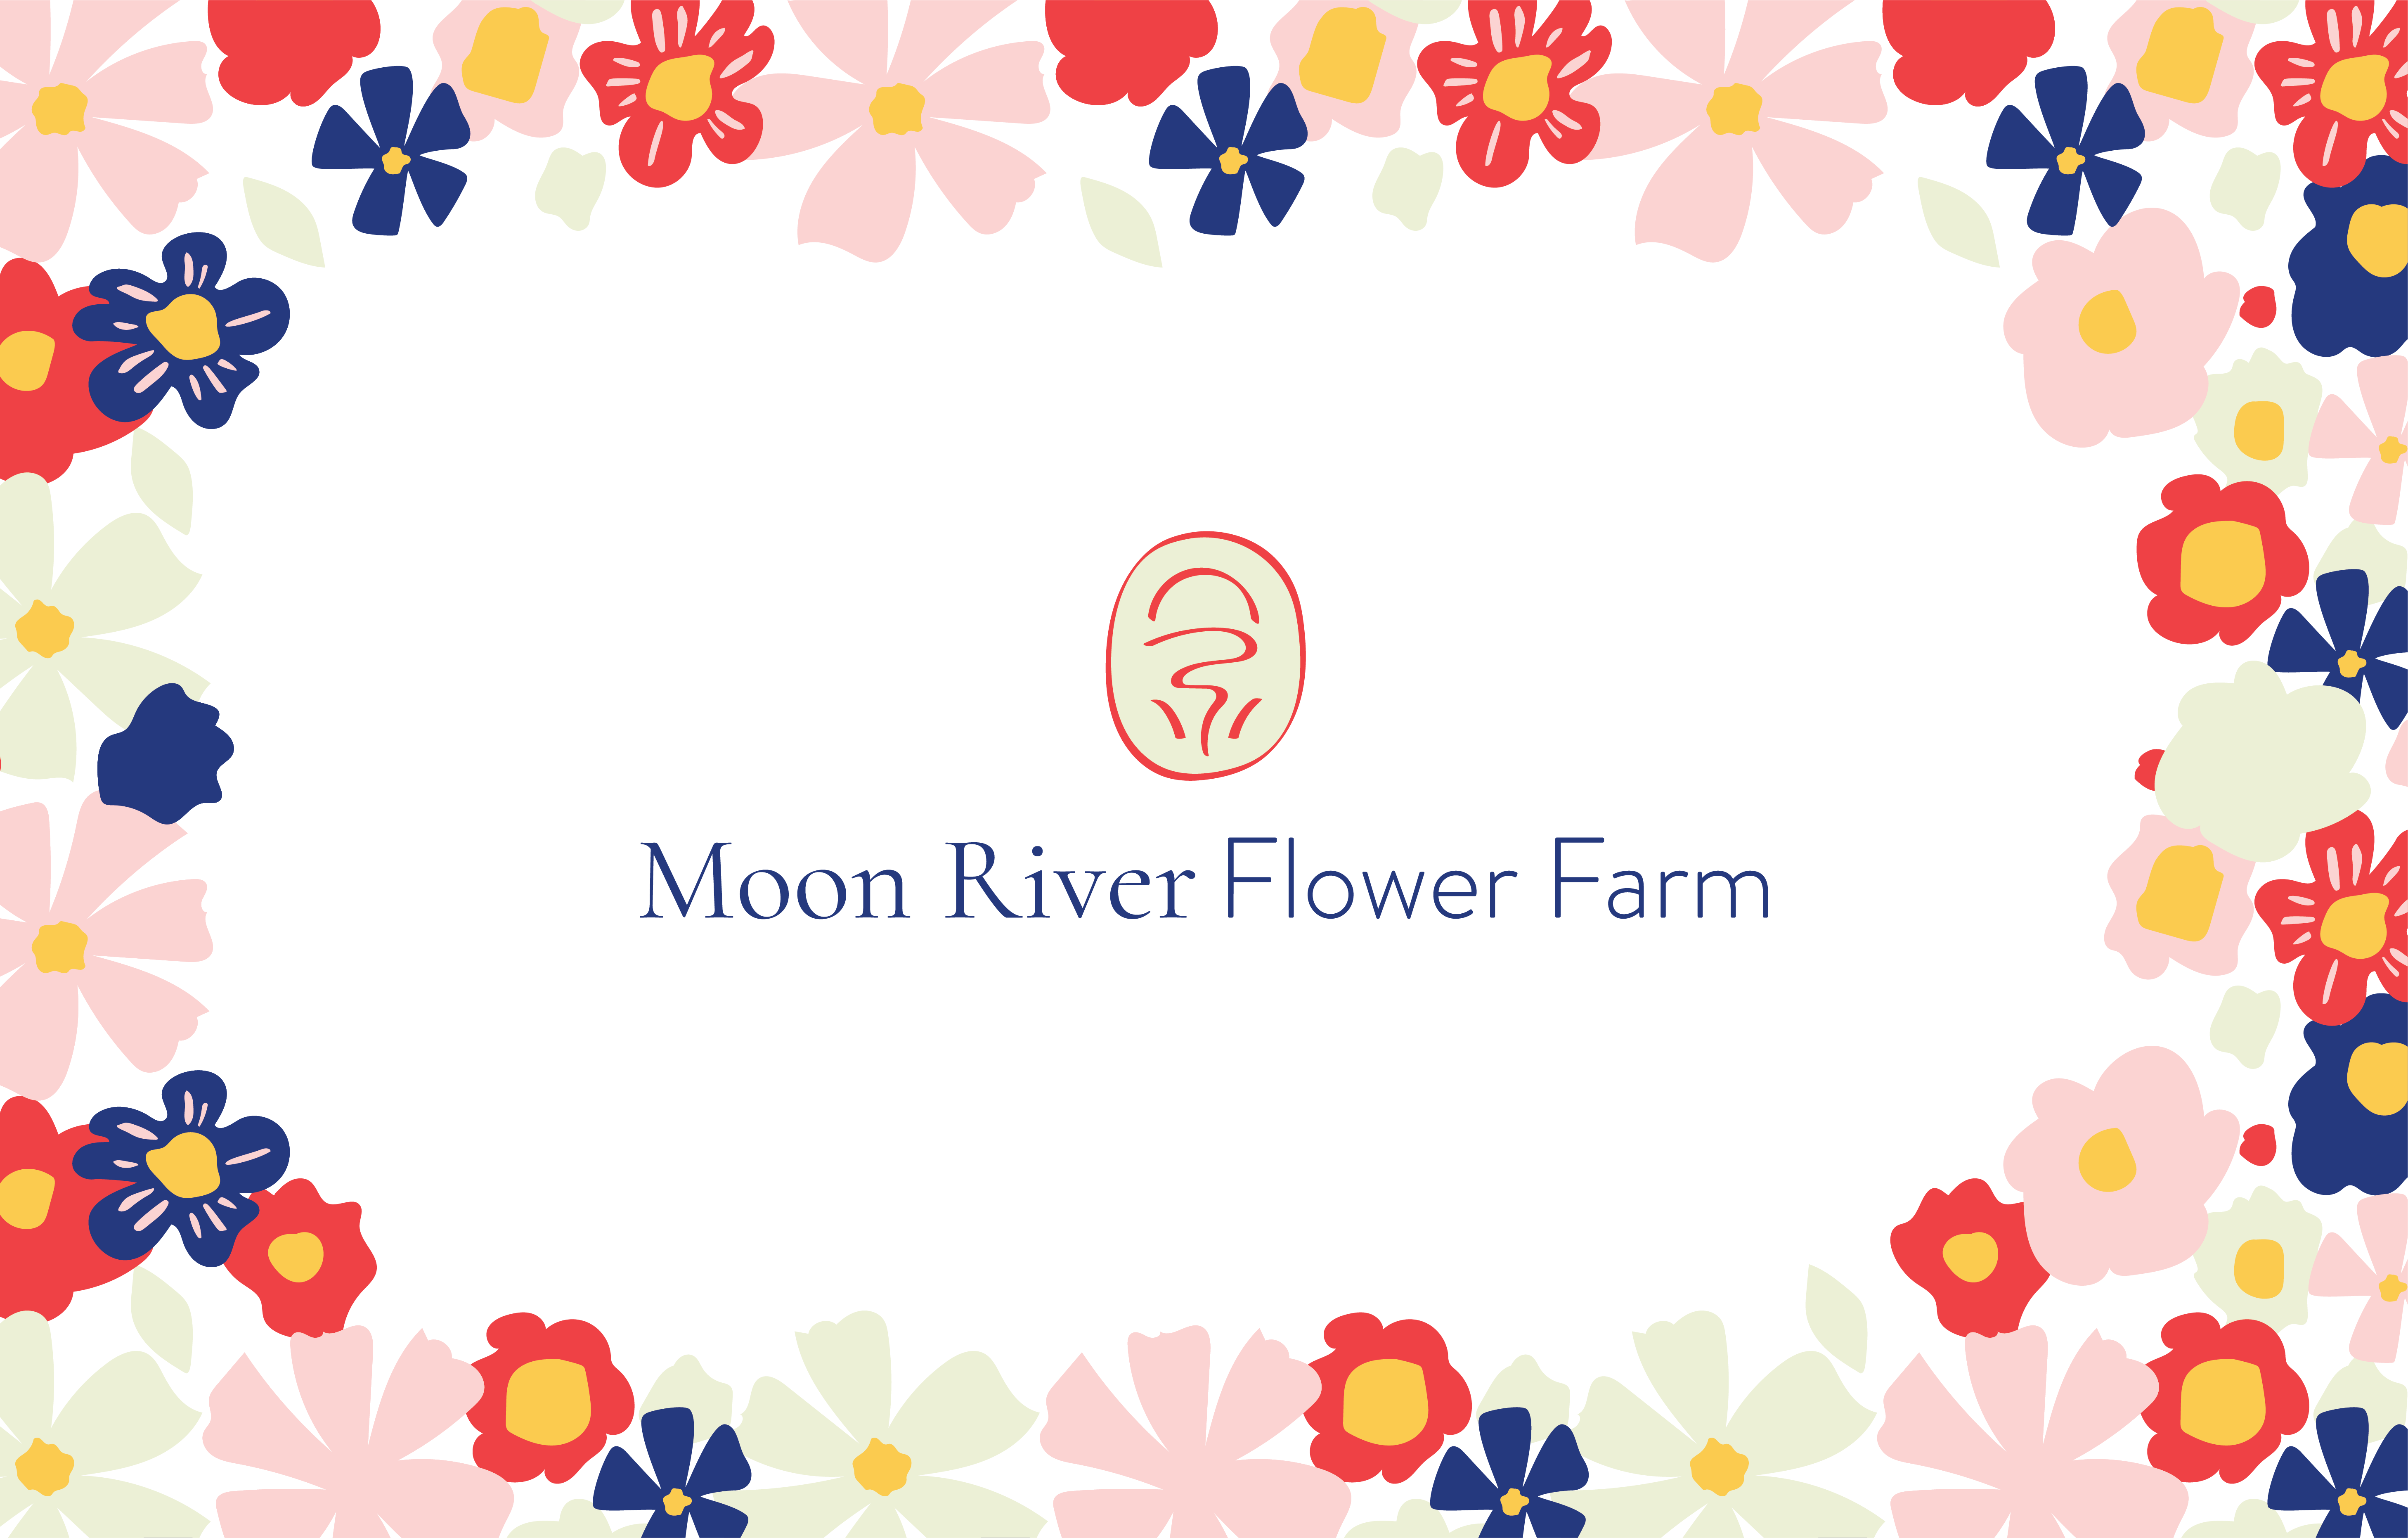 Moon River Flower Farm design